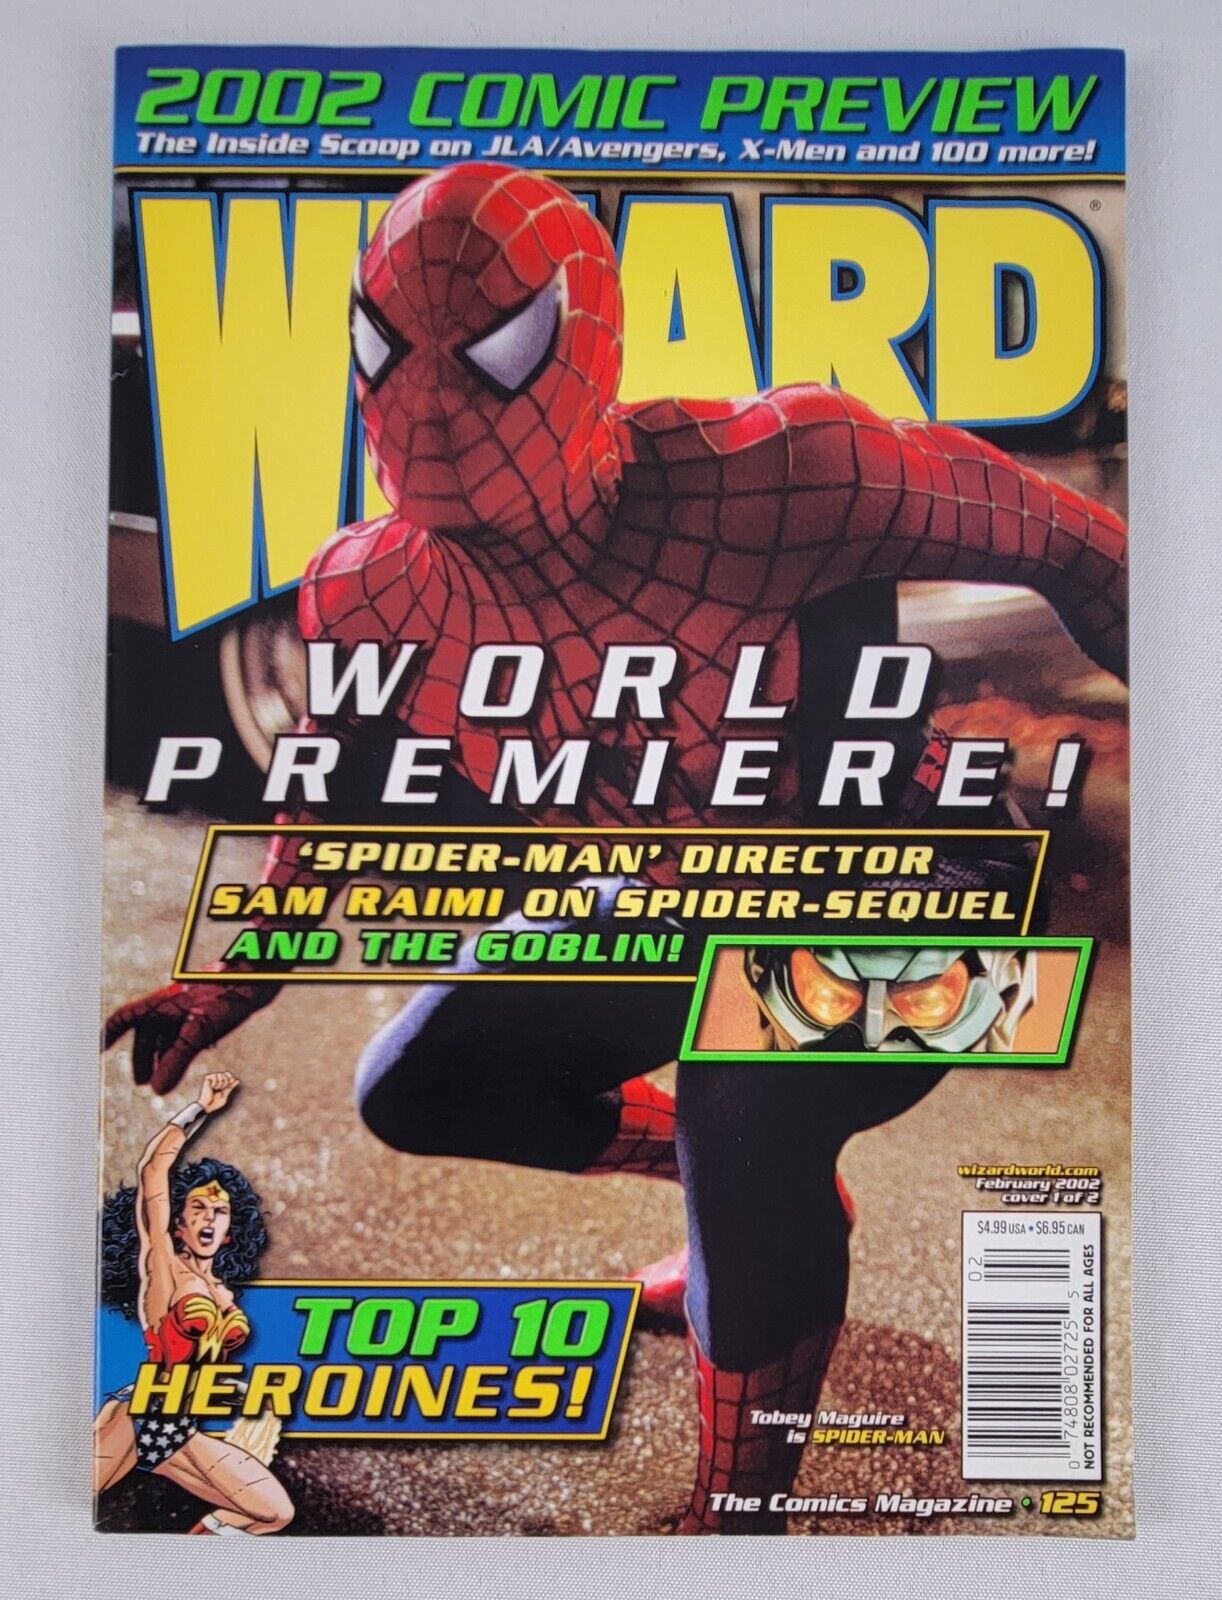 WIZARD Comic Magazine #125 February 2002 Spider Man World Premiere Cover